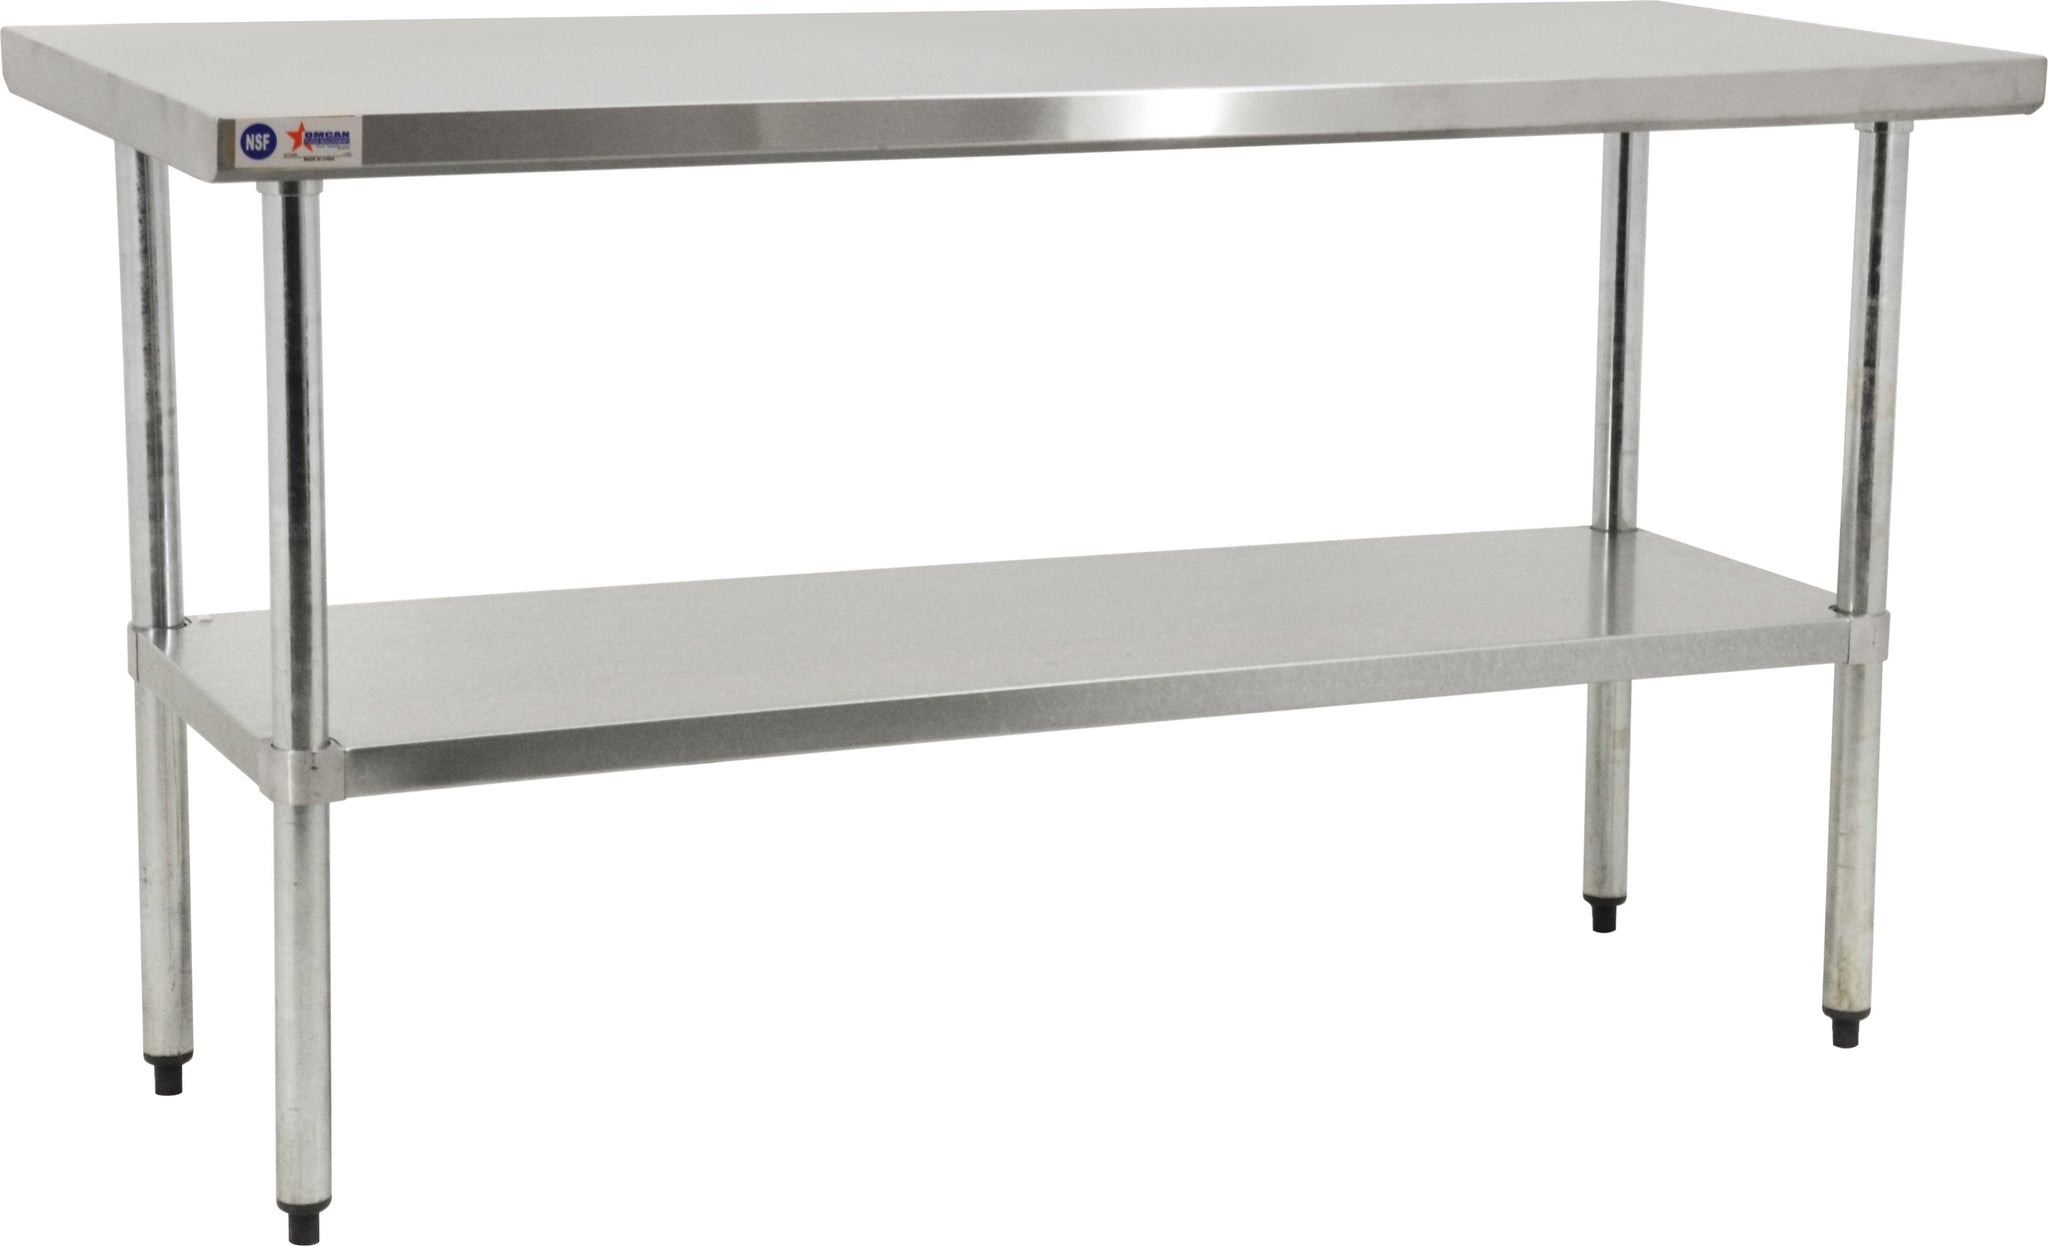 Omcan - 24” x 36” Elite Stainless Steel Work Table - 17579